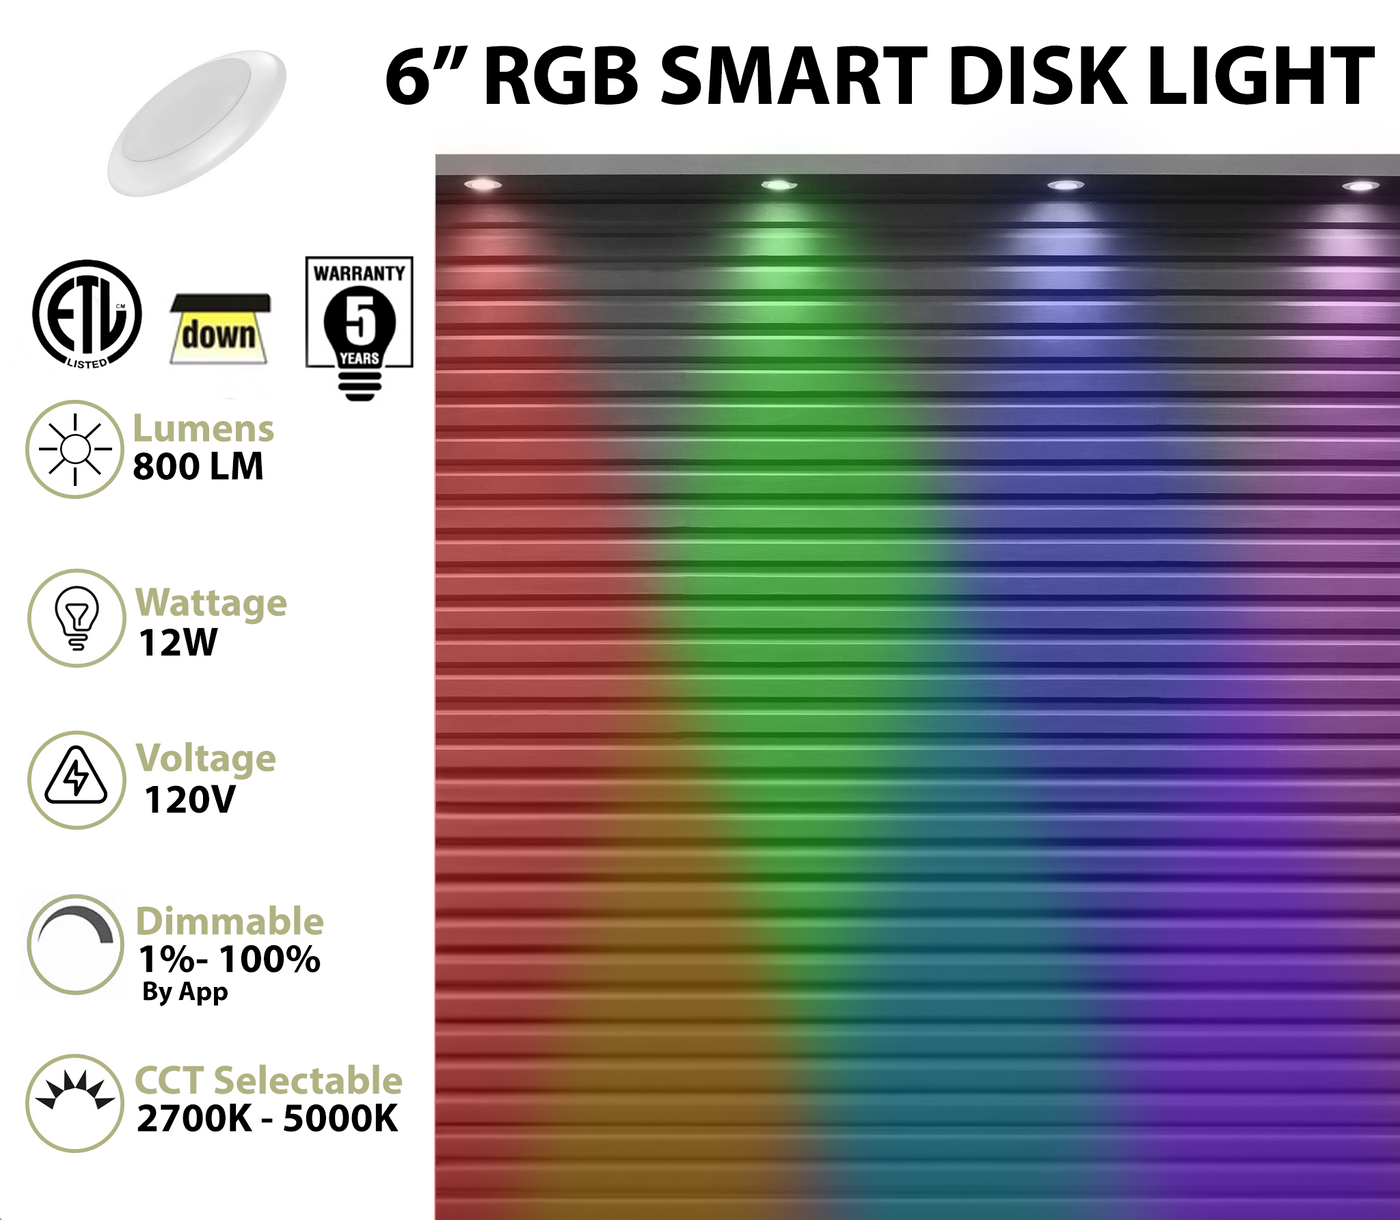 6 Inch LED RGB+W Smart Disk Light, 12W, CCT Selectable, 120V